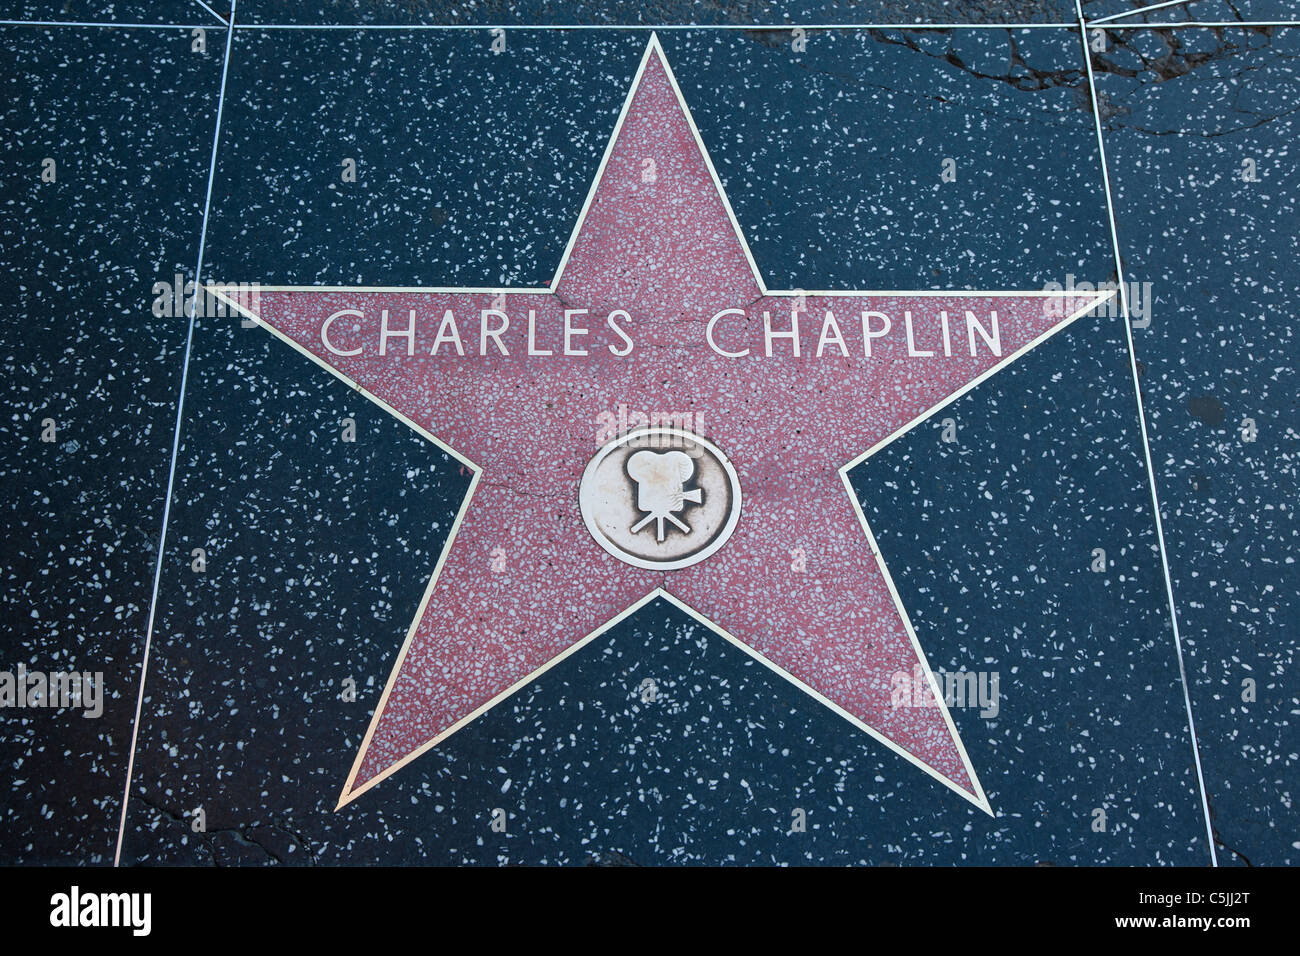 Charles Chaplin étoile sur le Hollywood Walk of Fame, Los Angeles, Californie, USA Banque D'Images